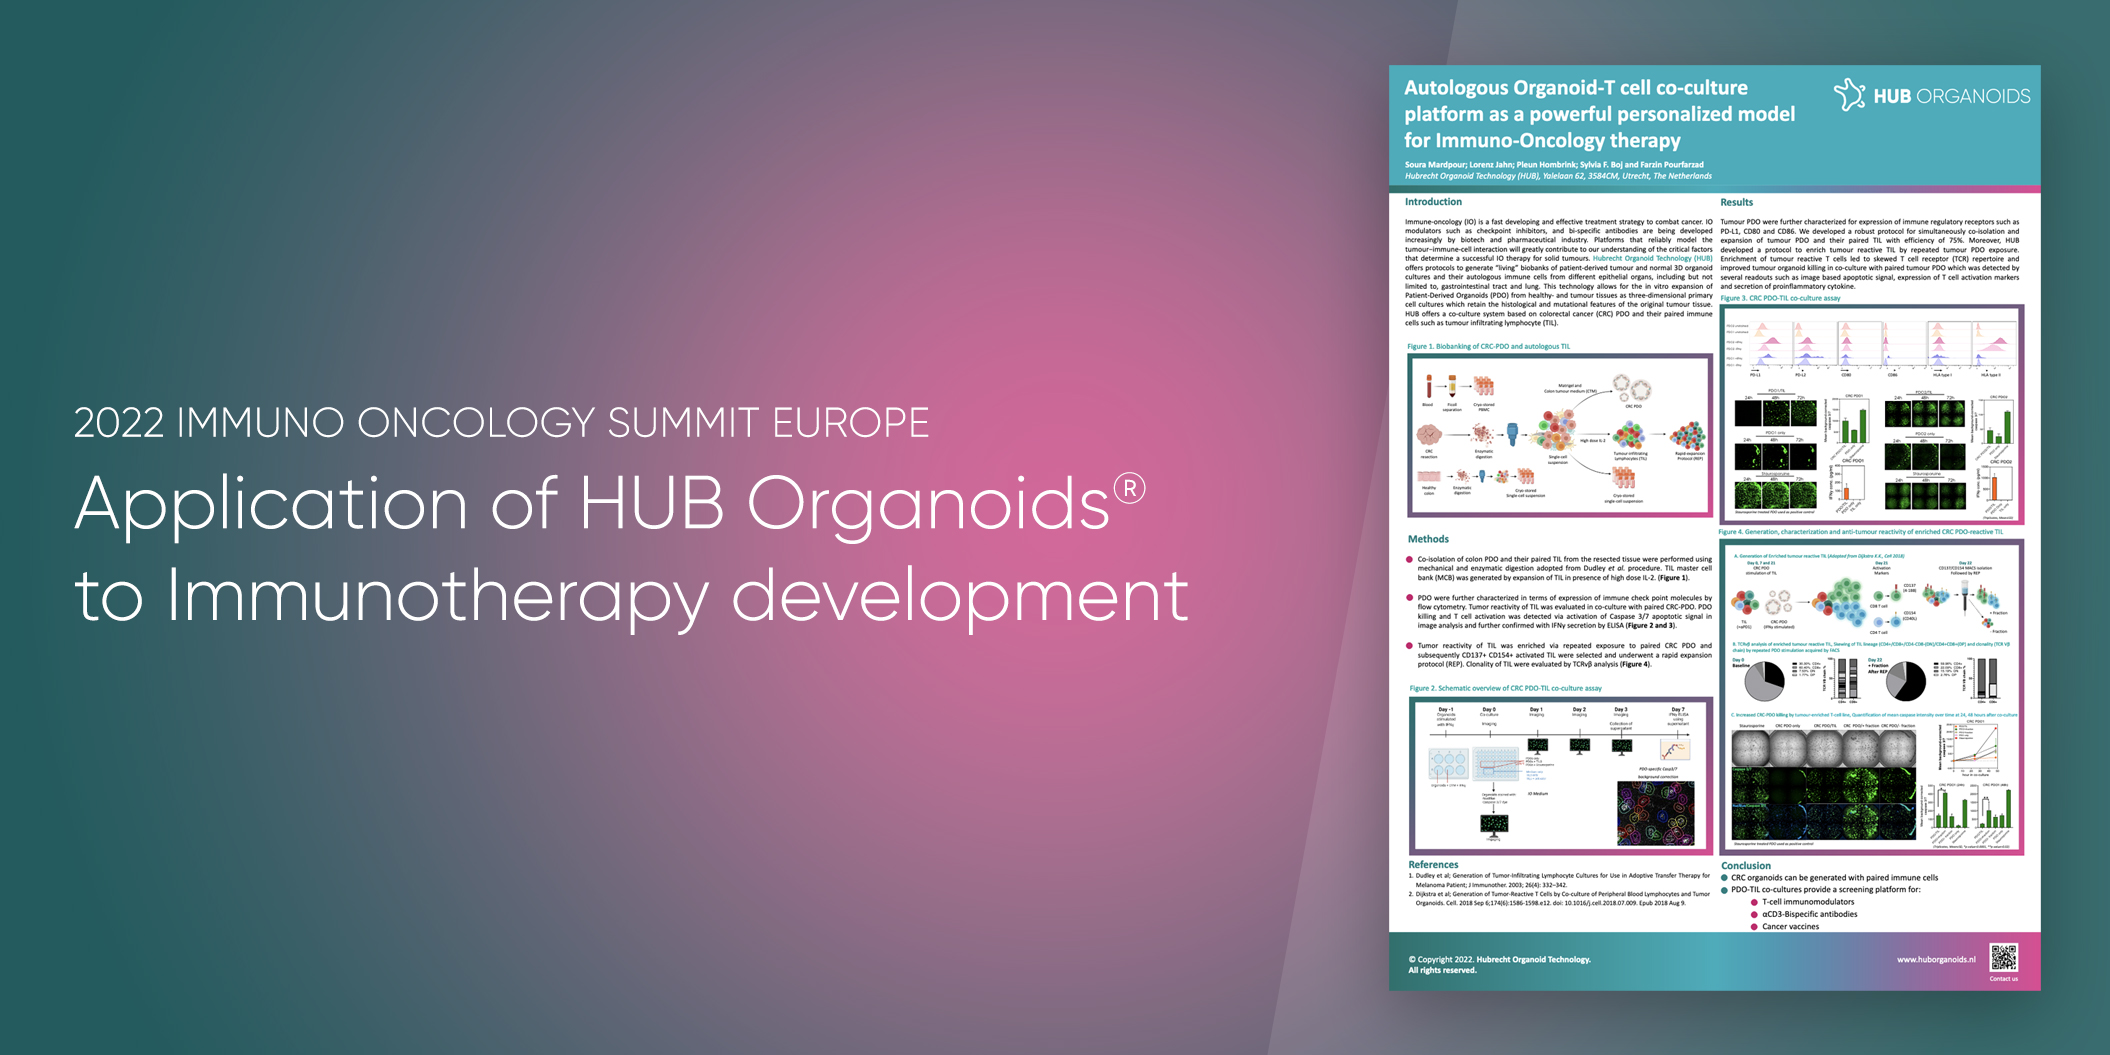 Application of HUB Organoids® to Immunotherapy development